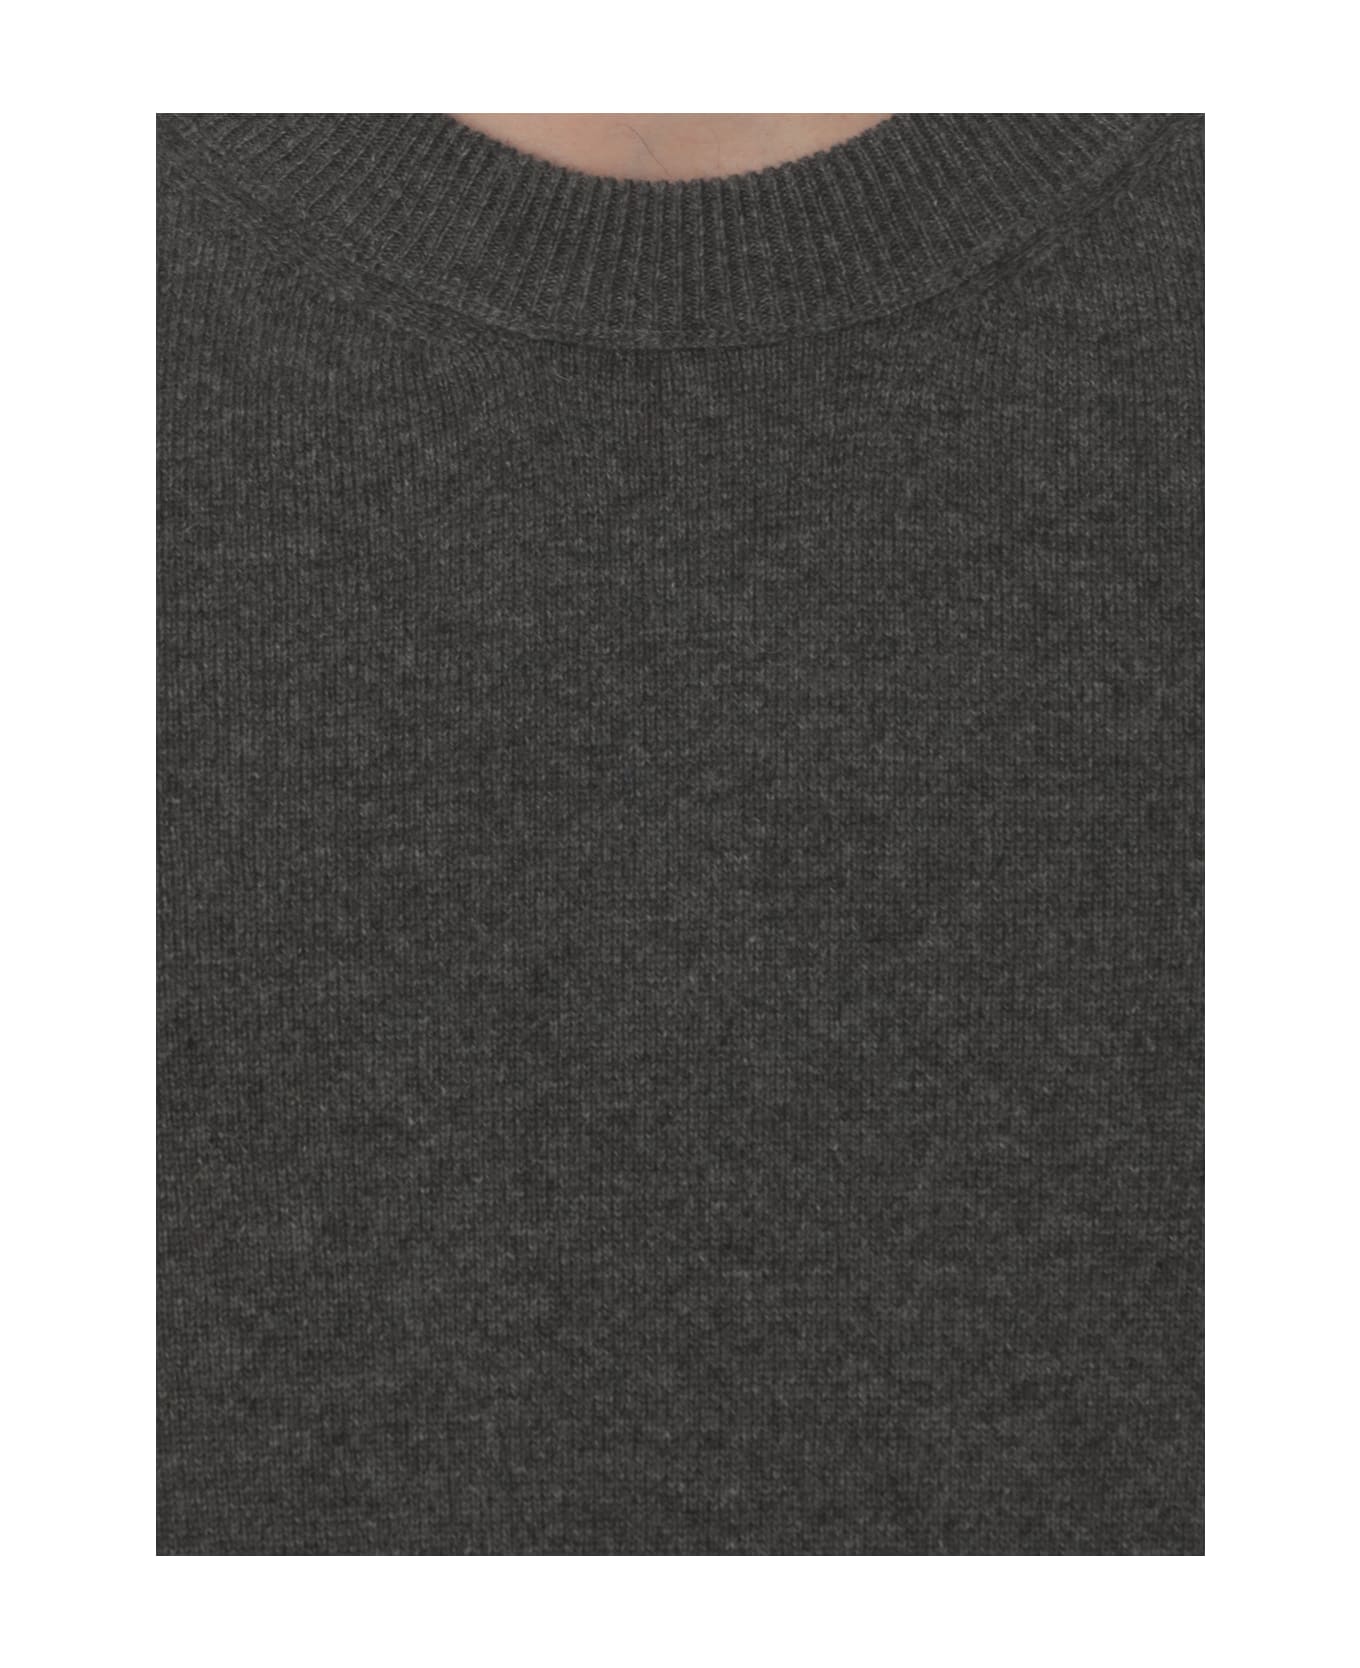 Maison Margiela Cashmere Sweater - Medium Grey